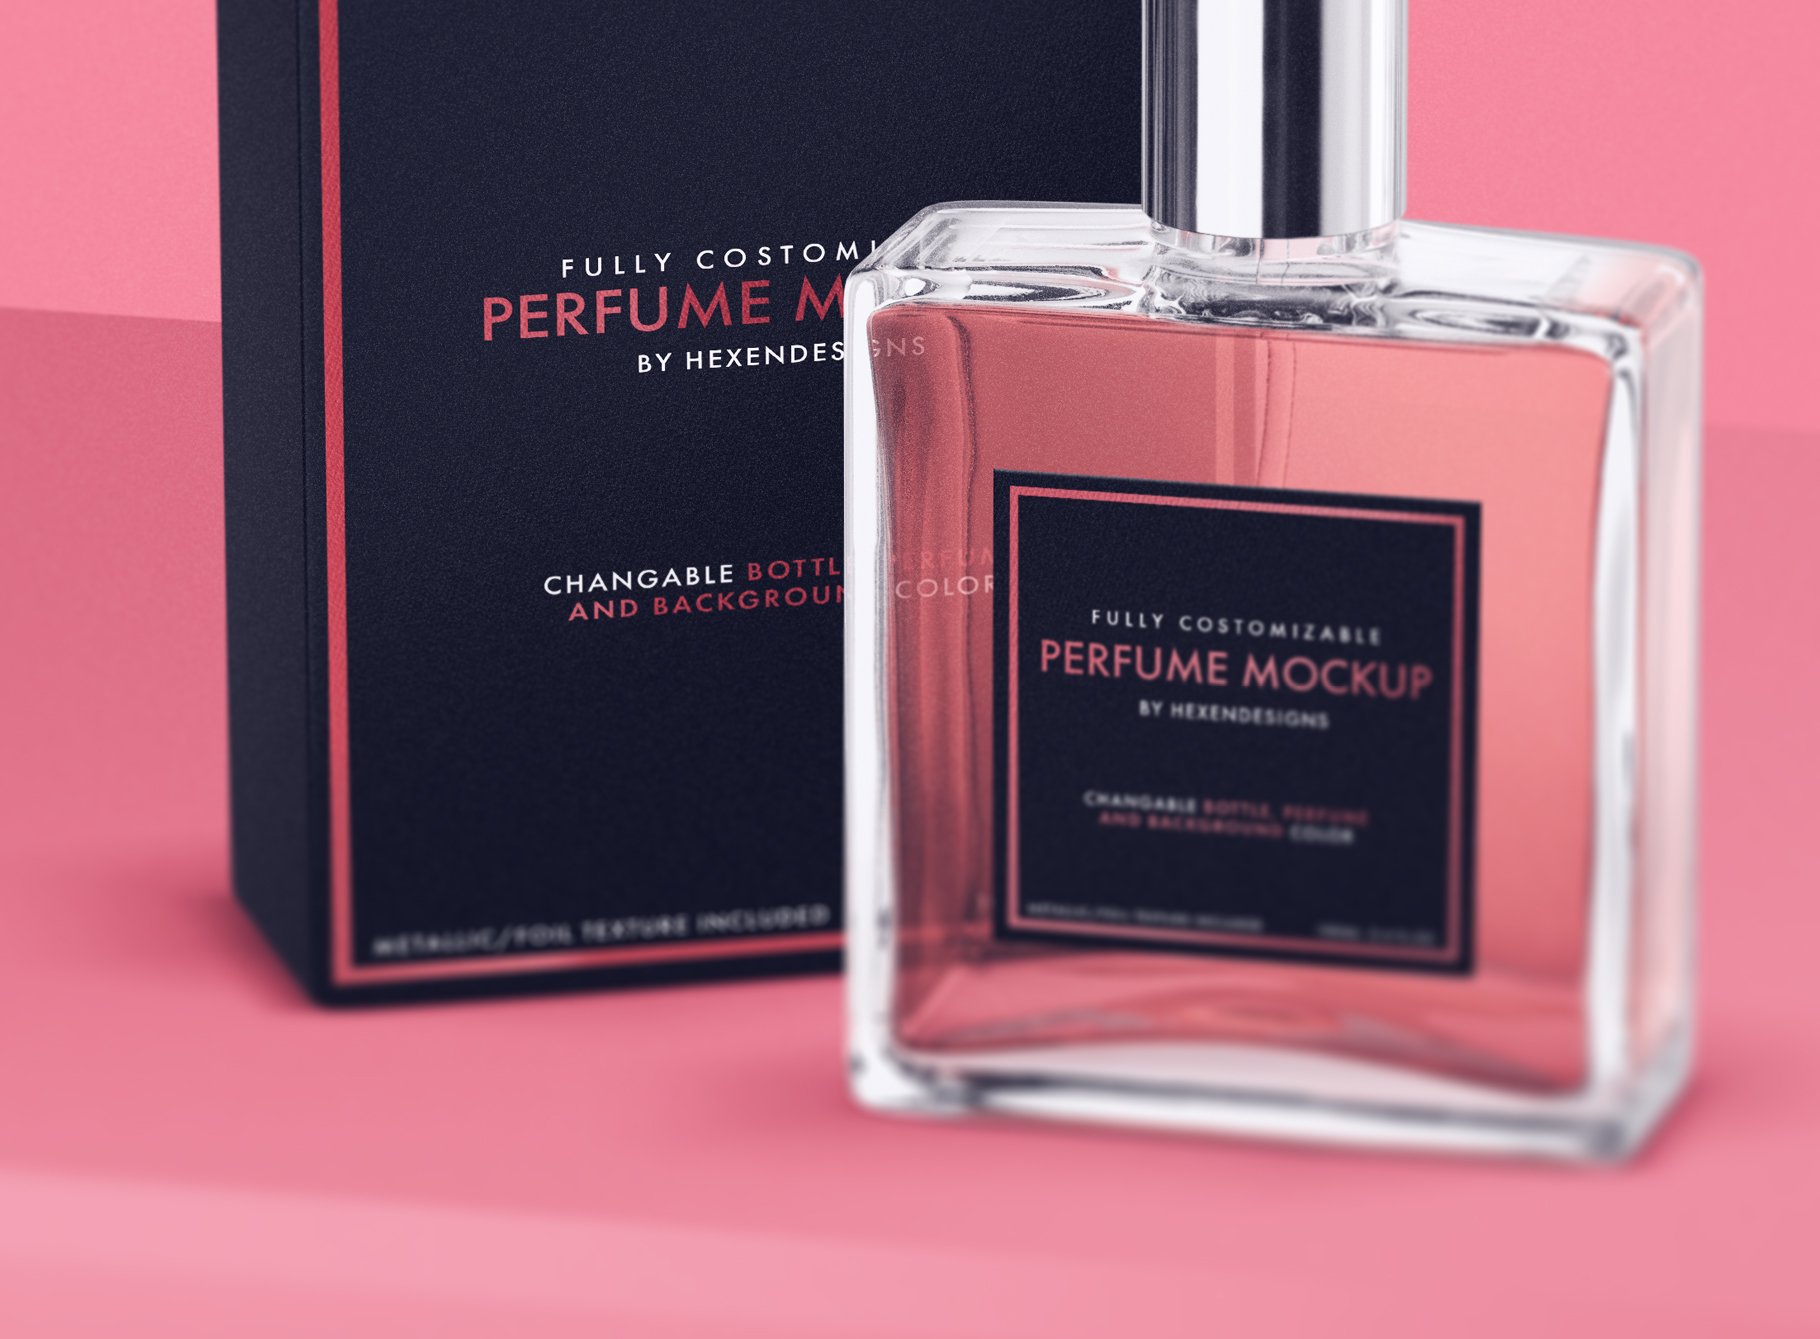 Perfume Mockup by Mockup5 on Dribbble